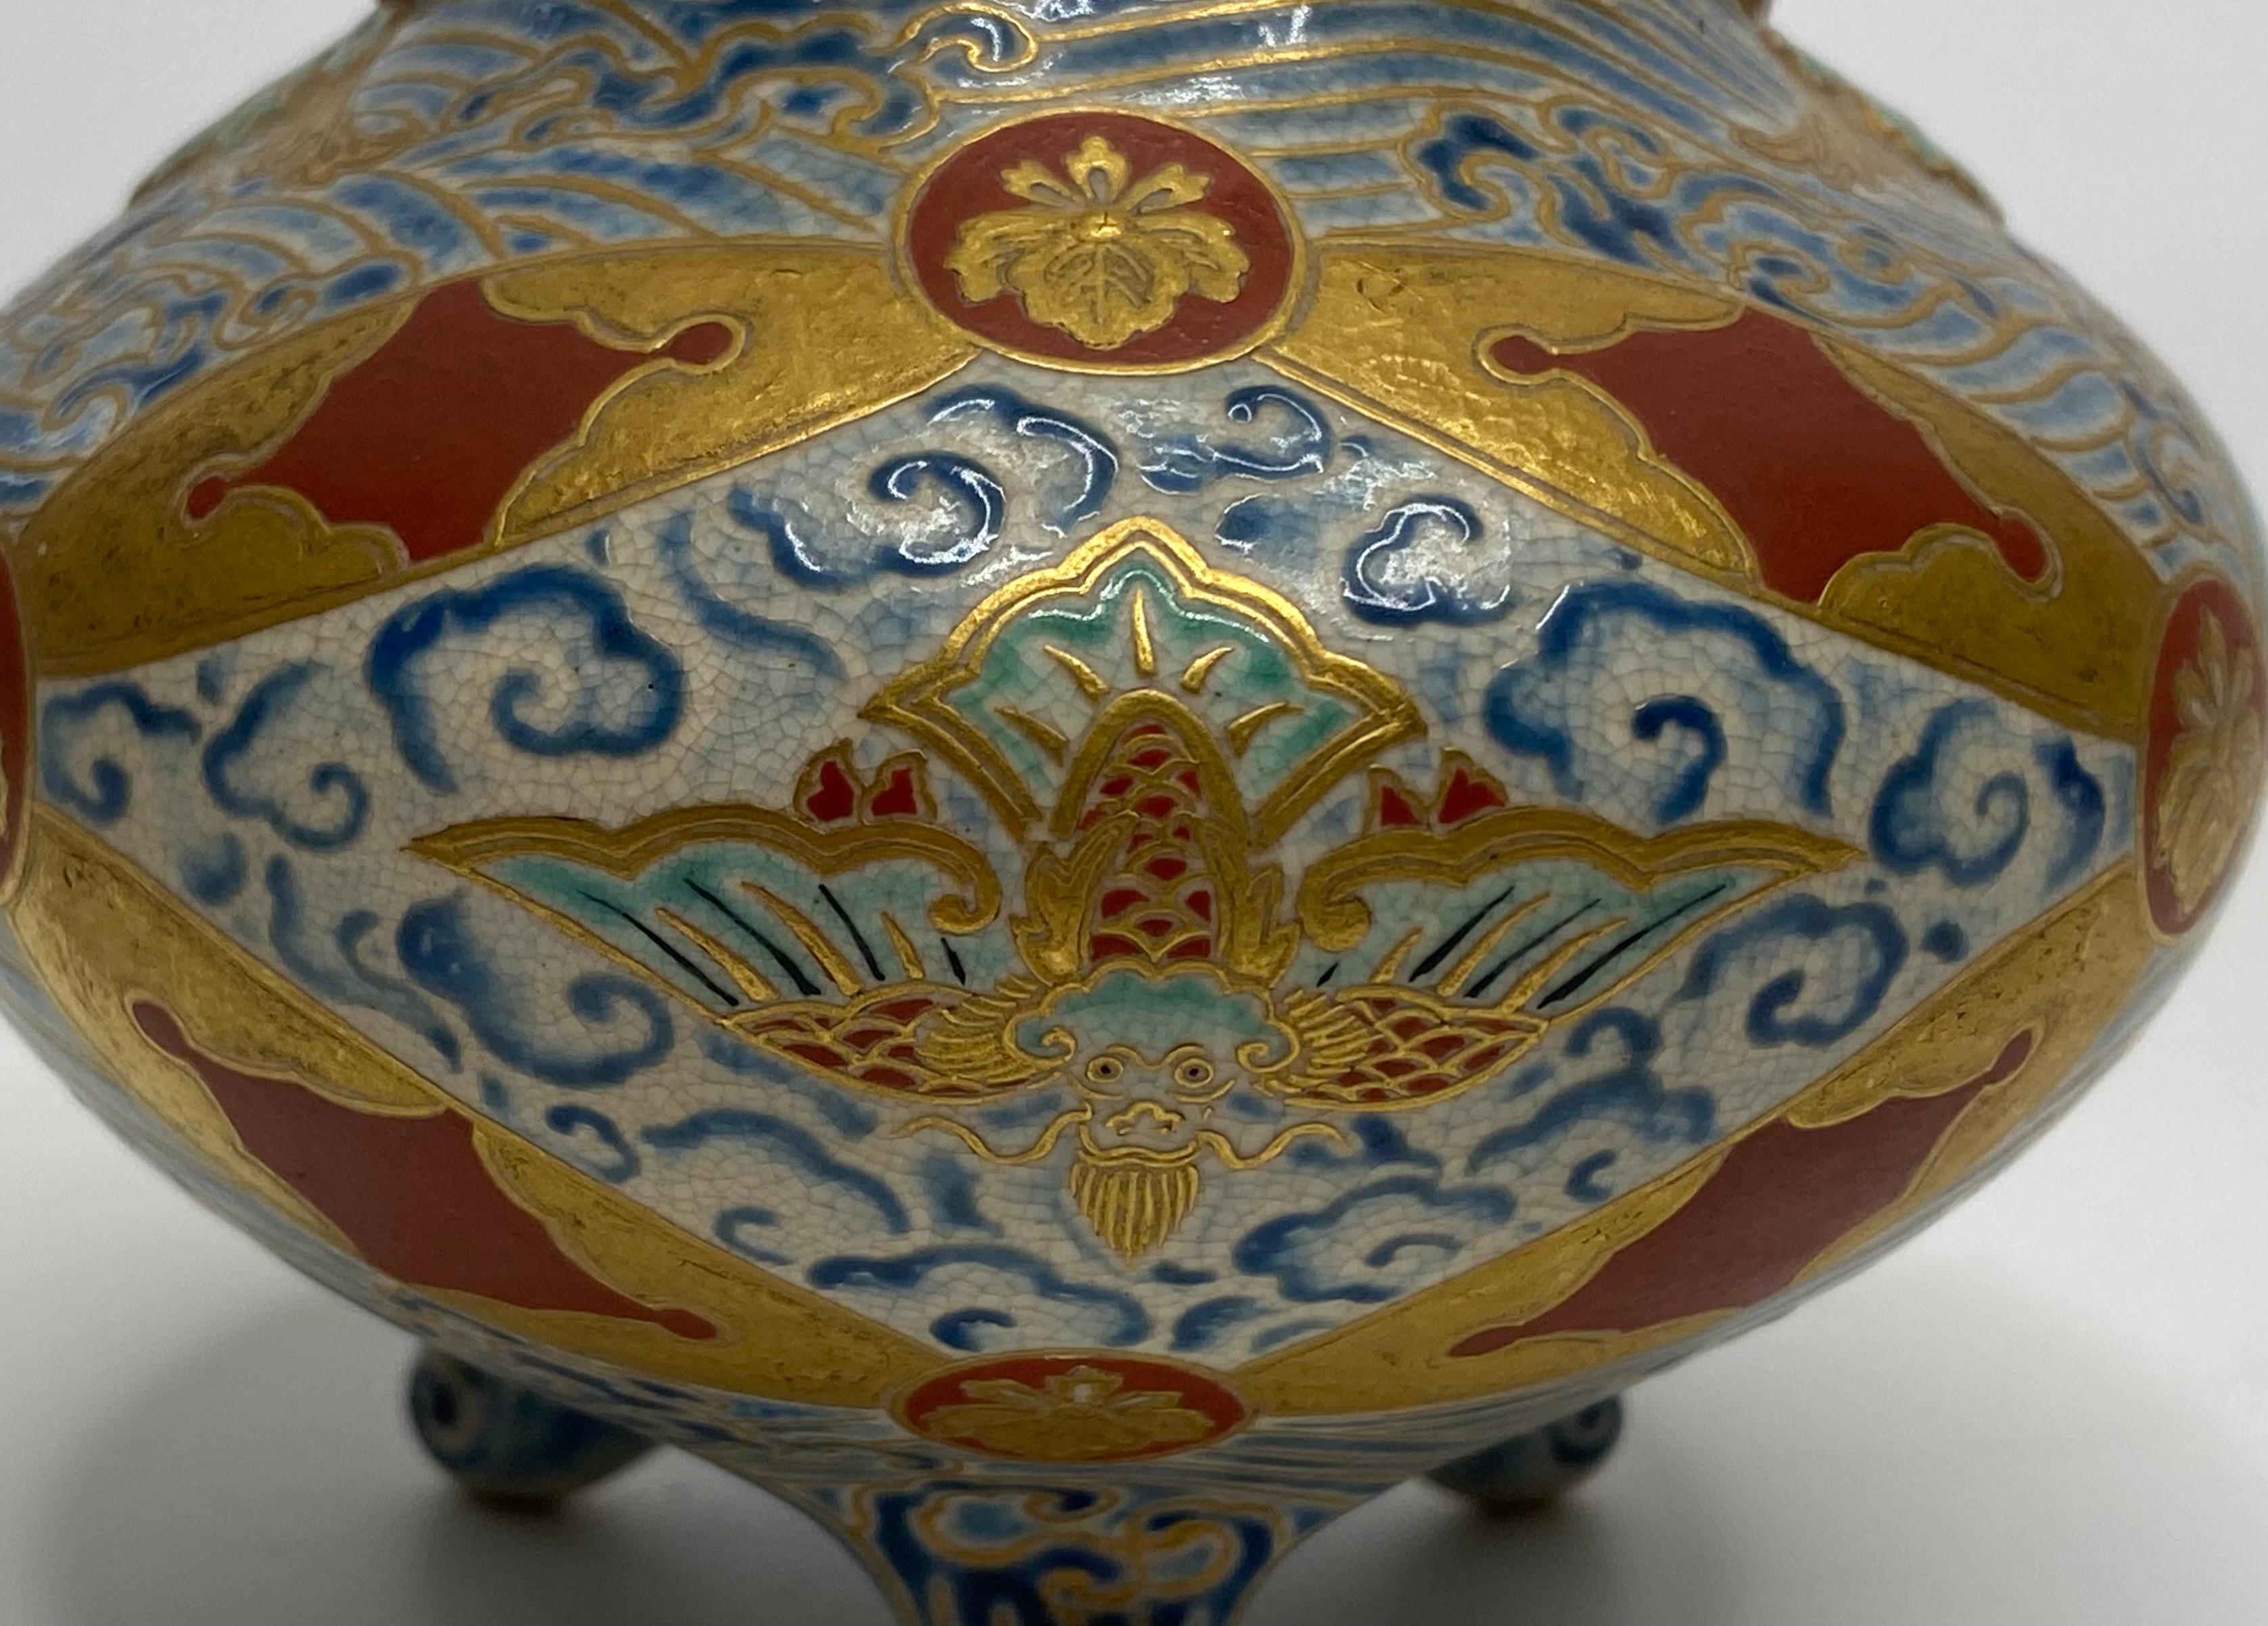 Earthenware Imperial Satsuma pottery and silver koro, Japan, Meiji Period.